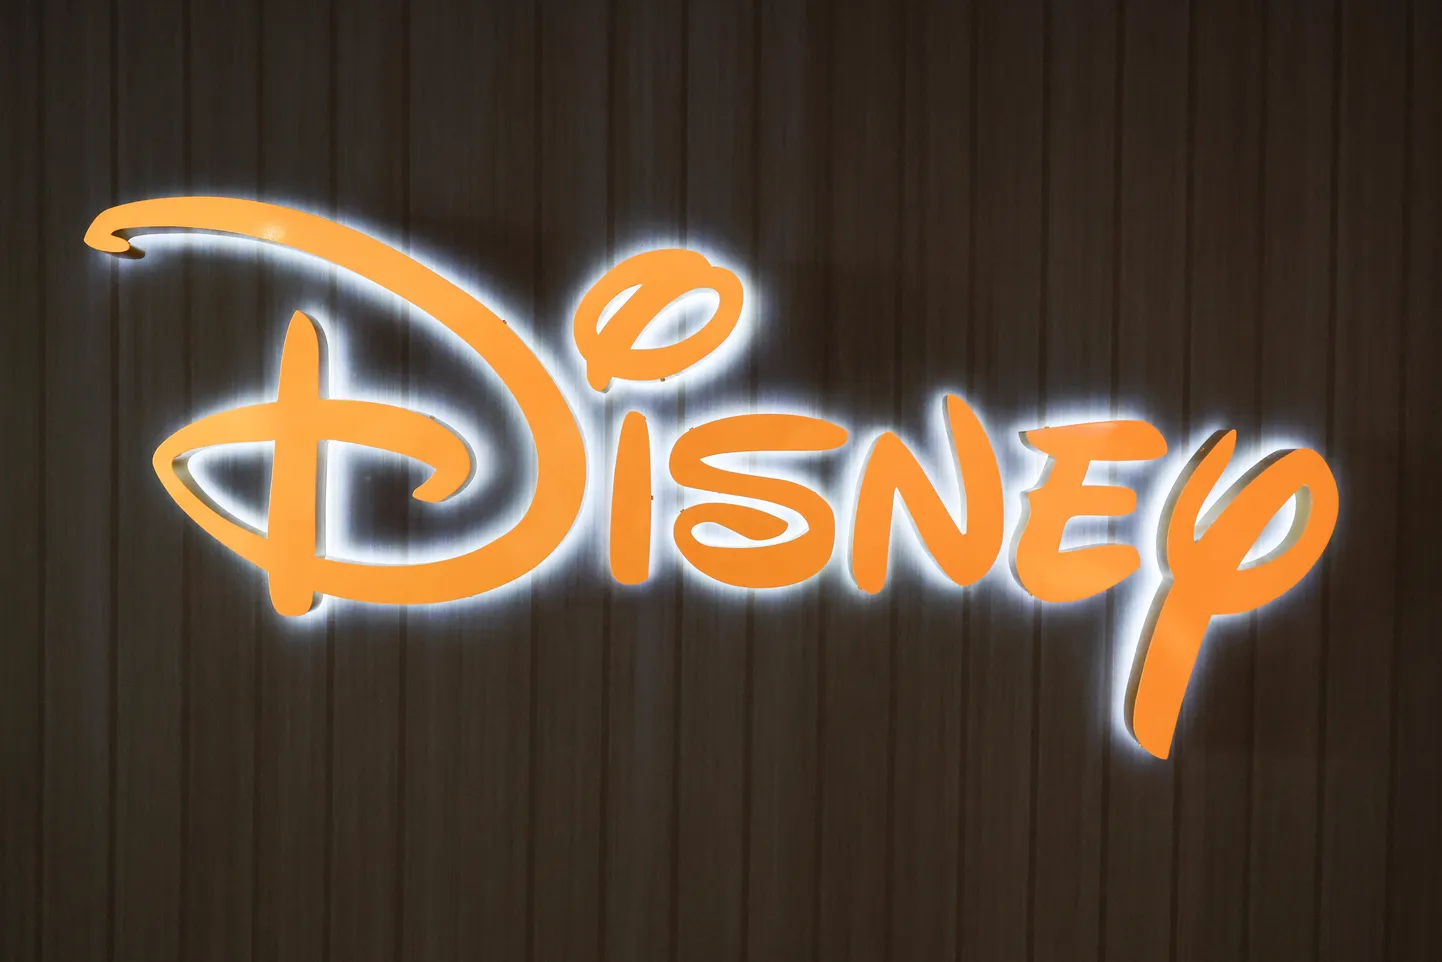 Disney logo.